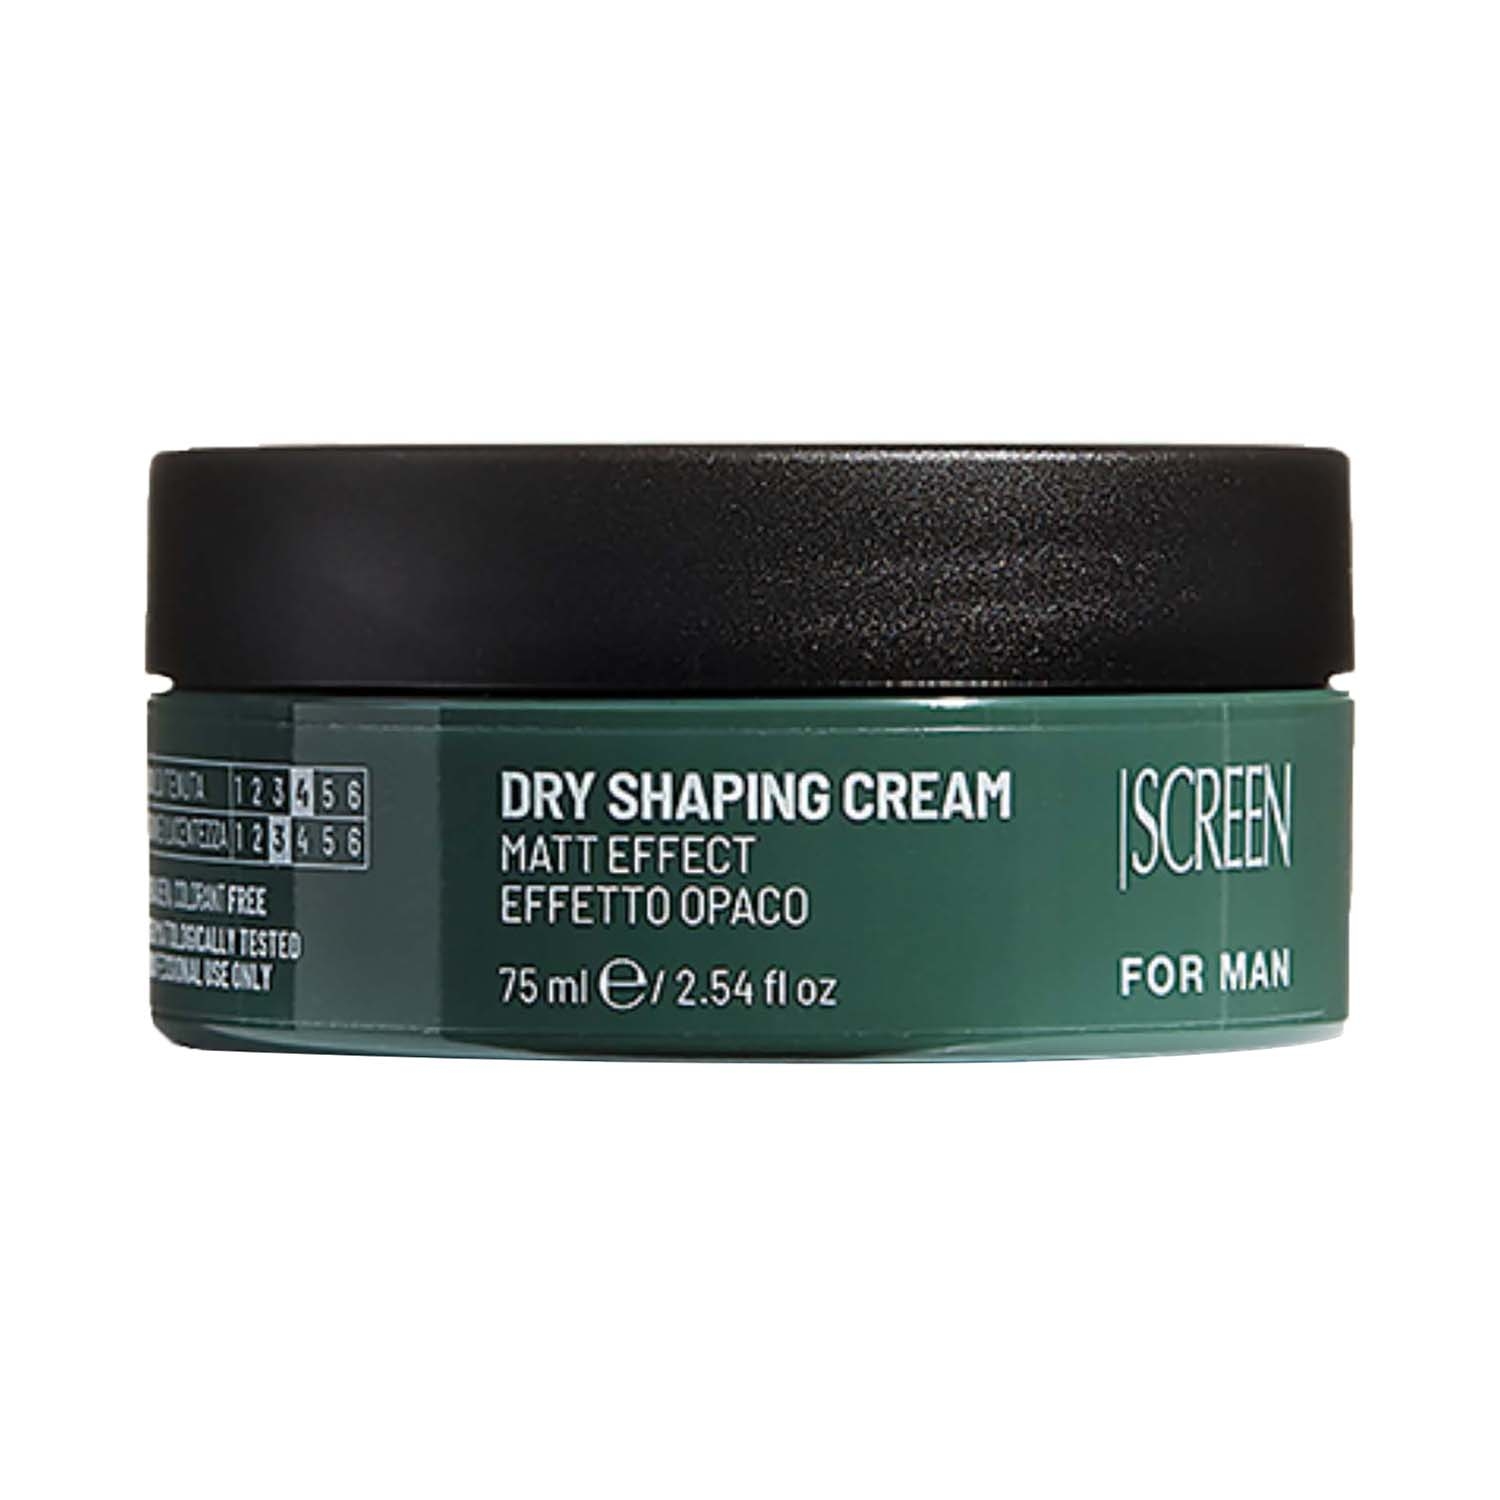 Screen | Screen For Man Dry Shaping Cream (75ml)